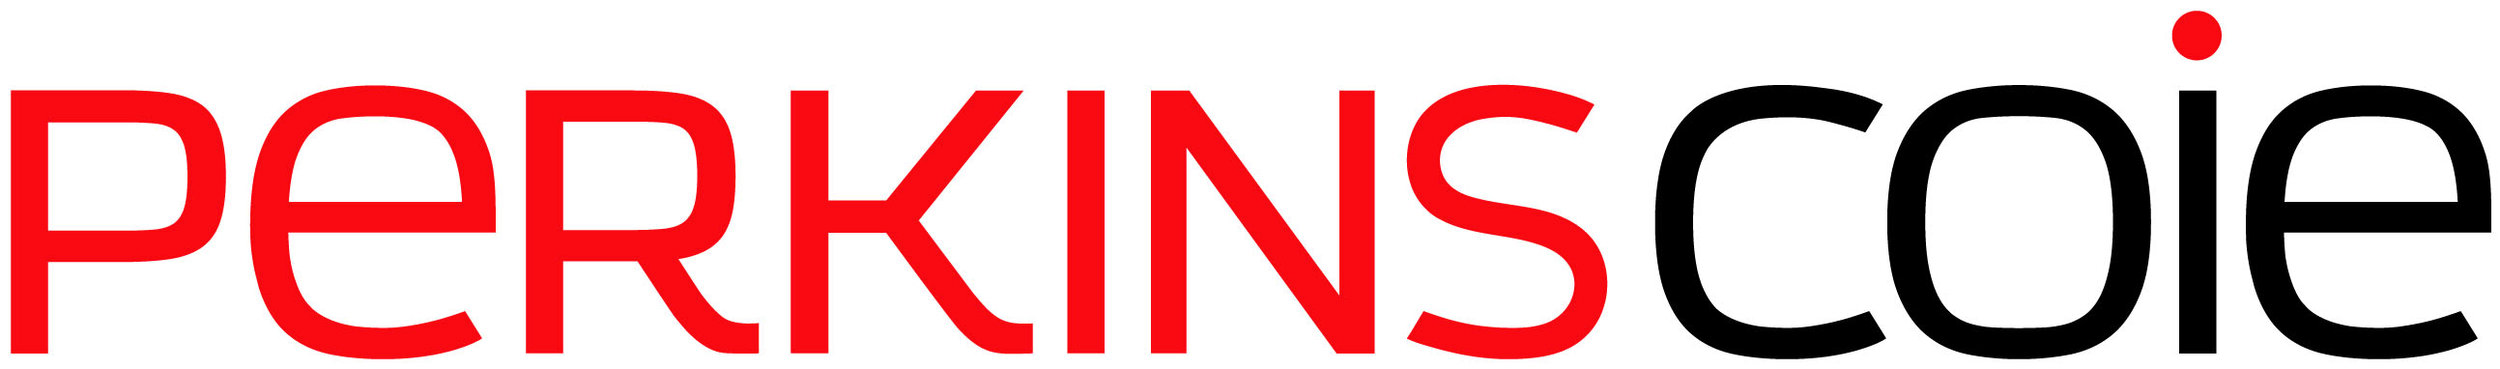 Perkins Coie CYMK Logo - No tagline (1).jpg